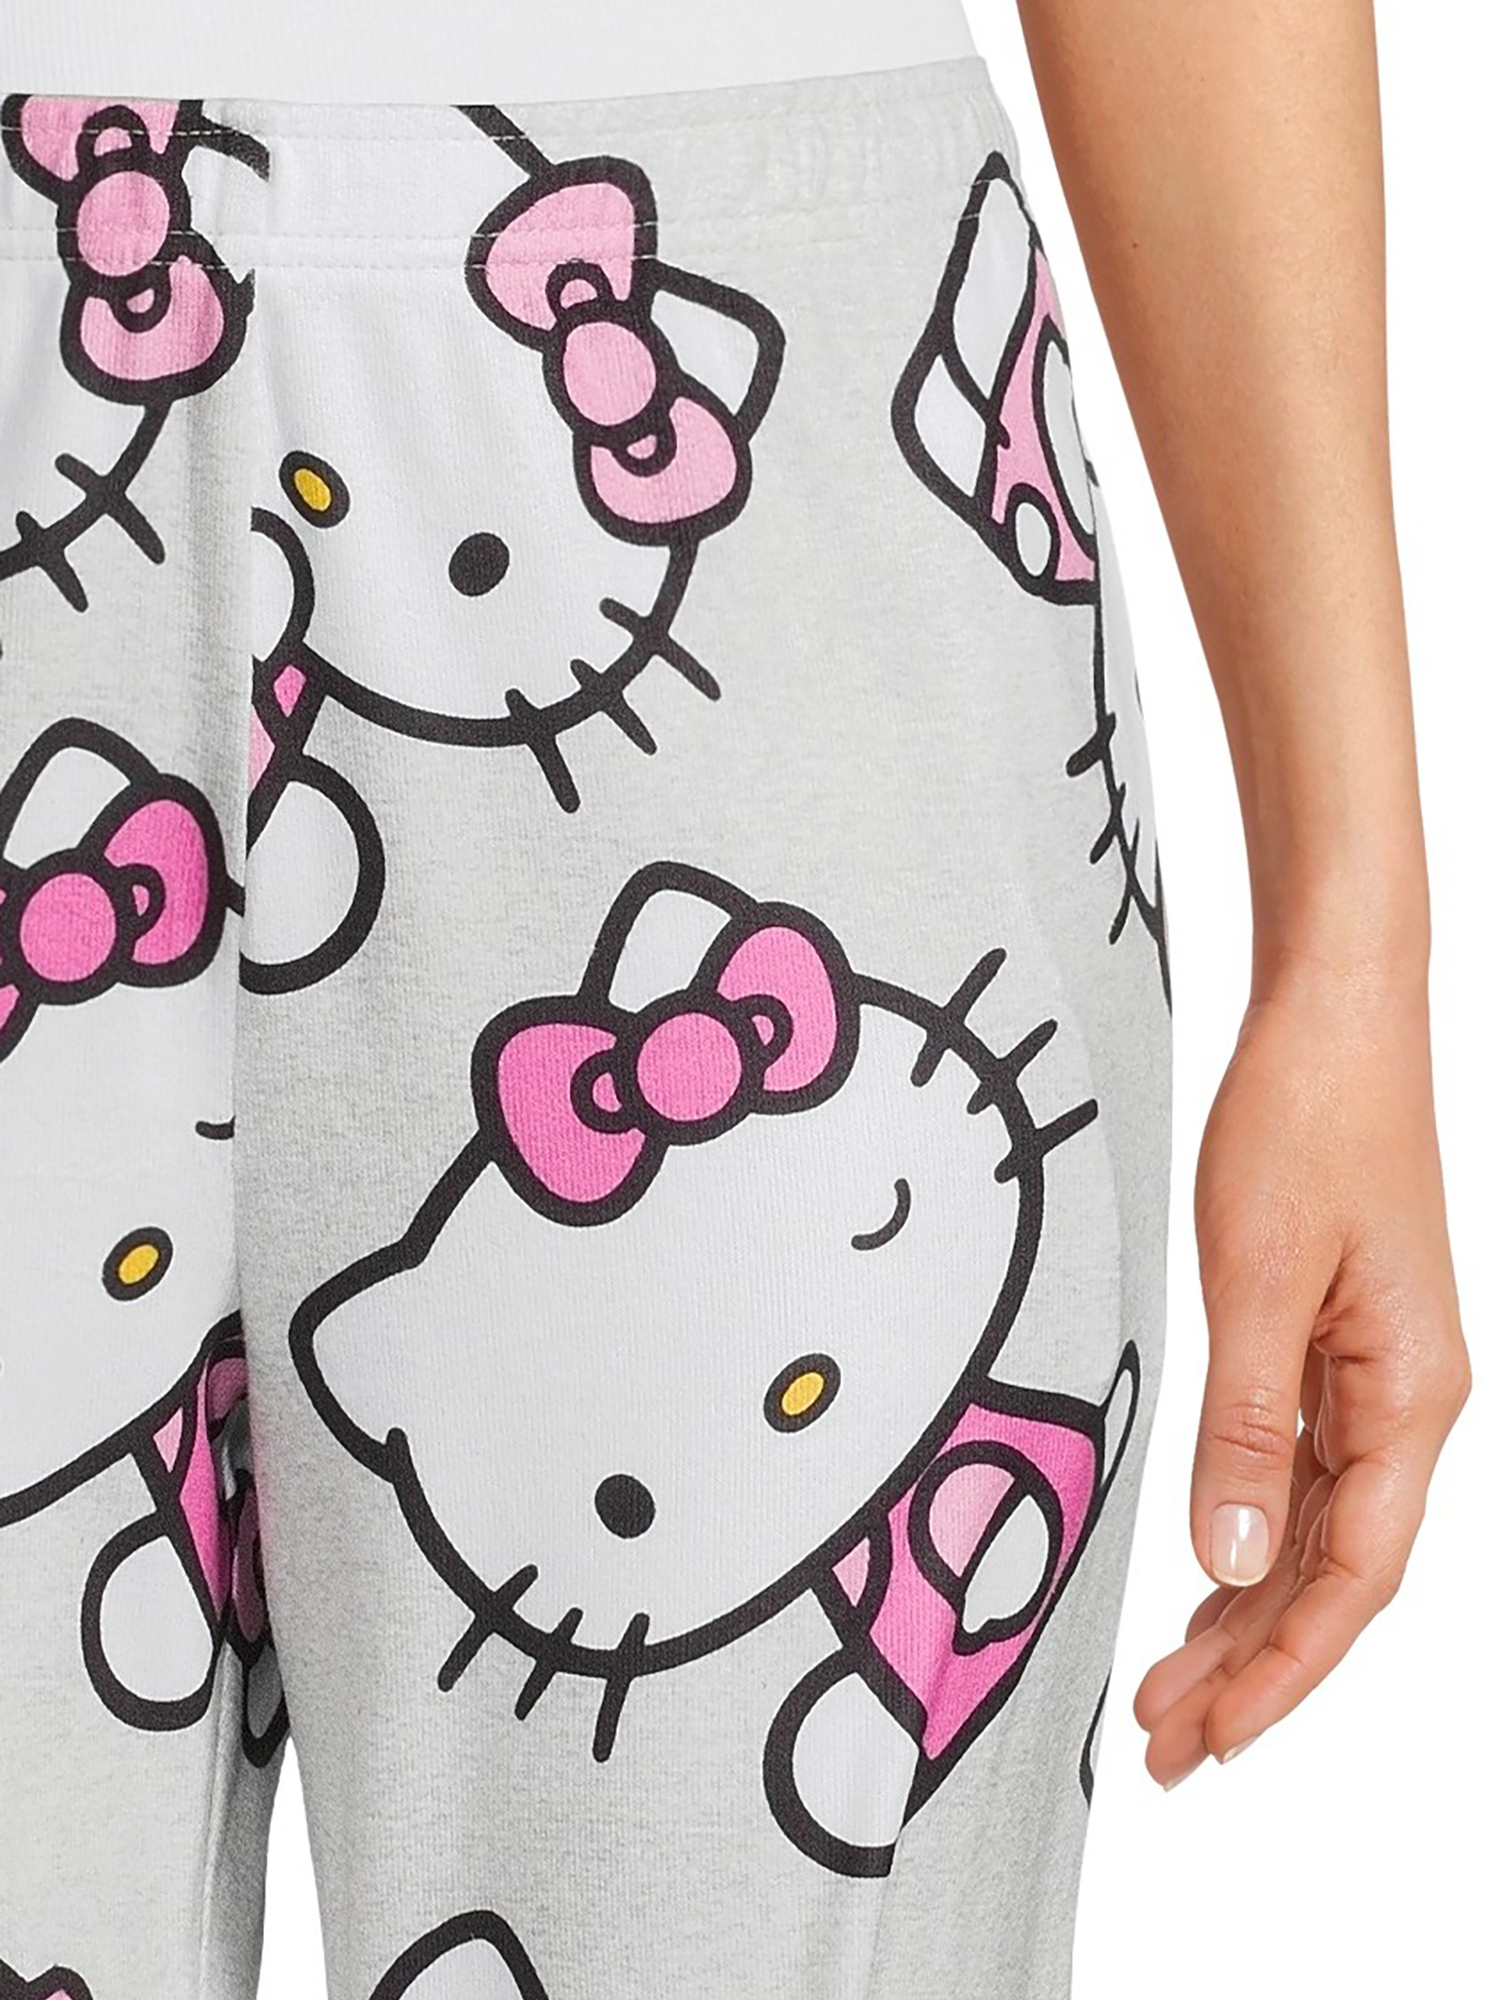 Hello Kitty Print Lounge Pants, Size XS-3X - image 4 of 5